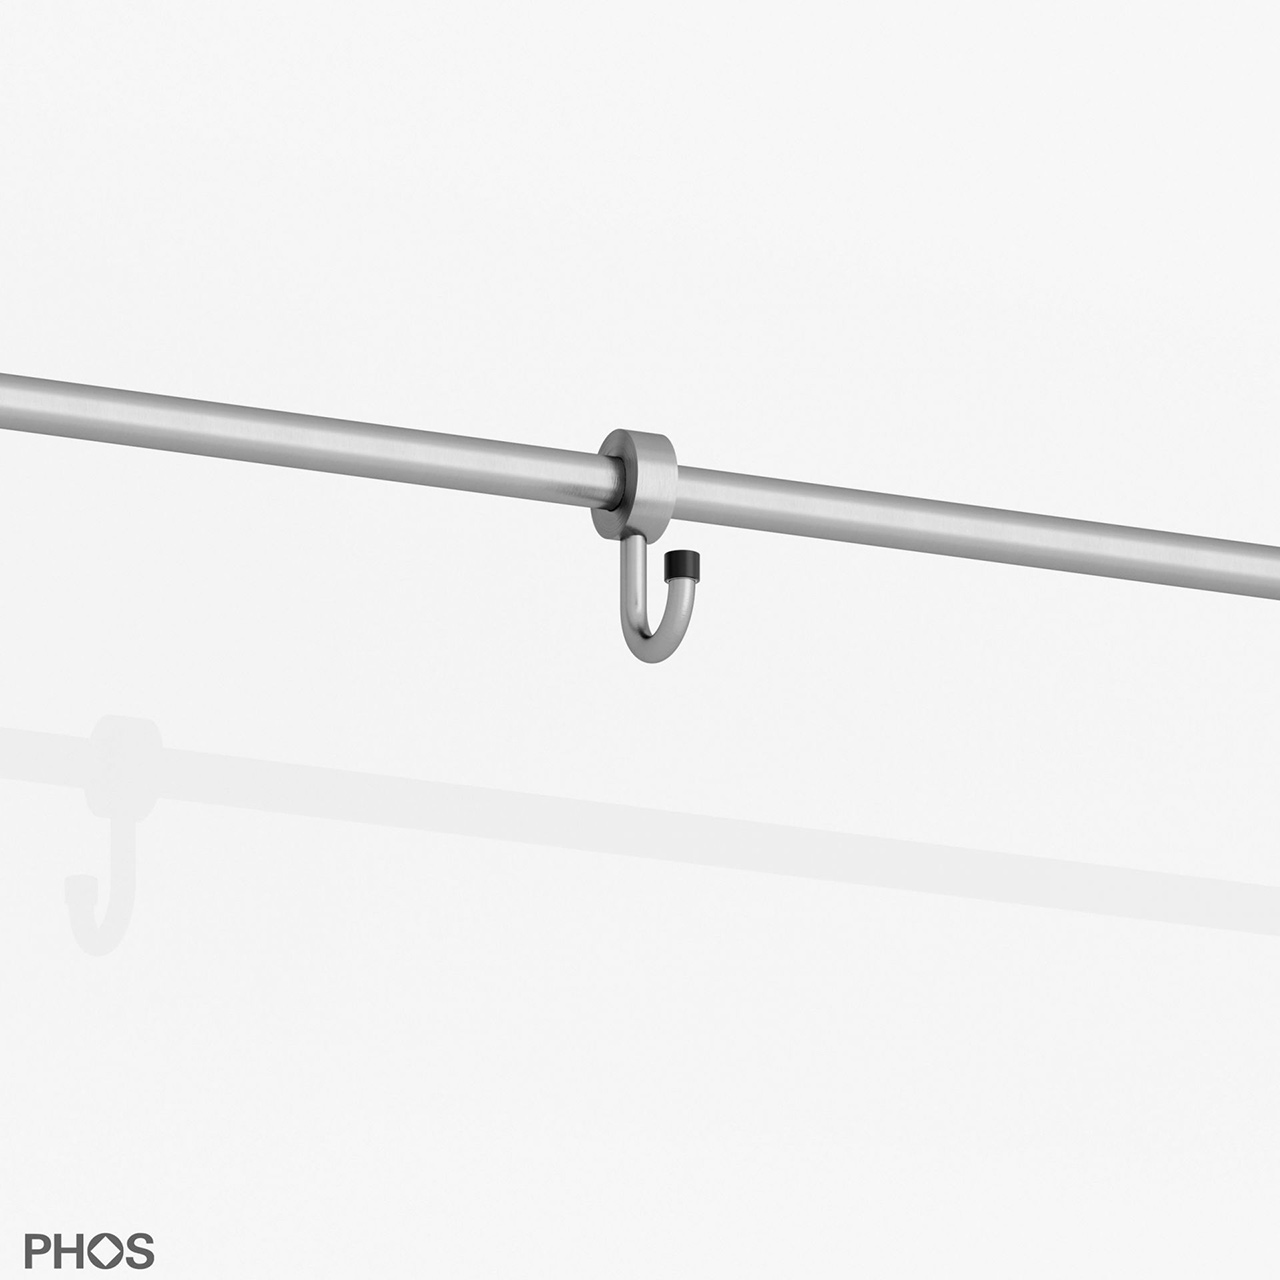 Towel Holder Hook for 12 mm Shower Rod - Stainless Steel